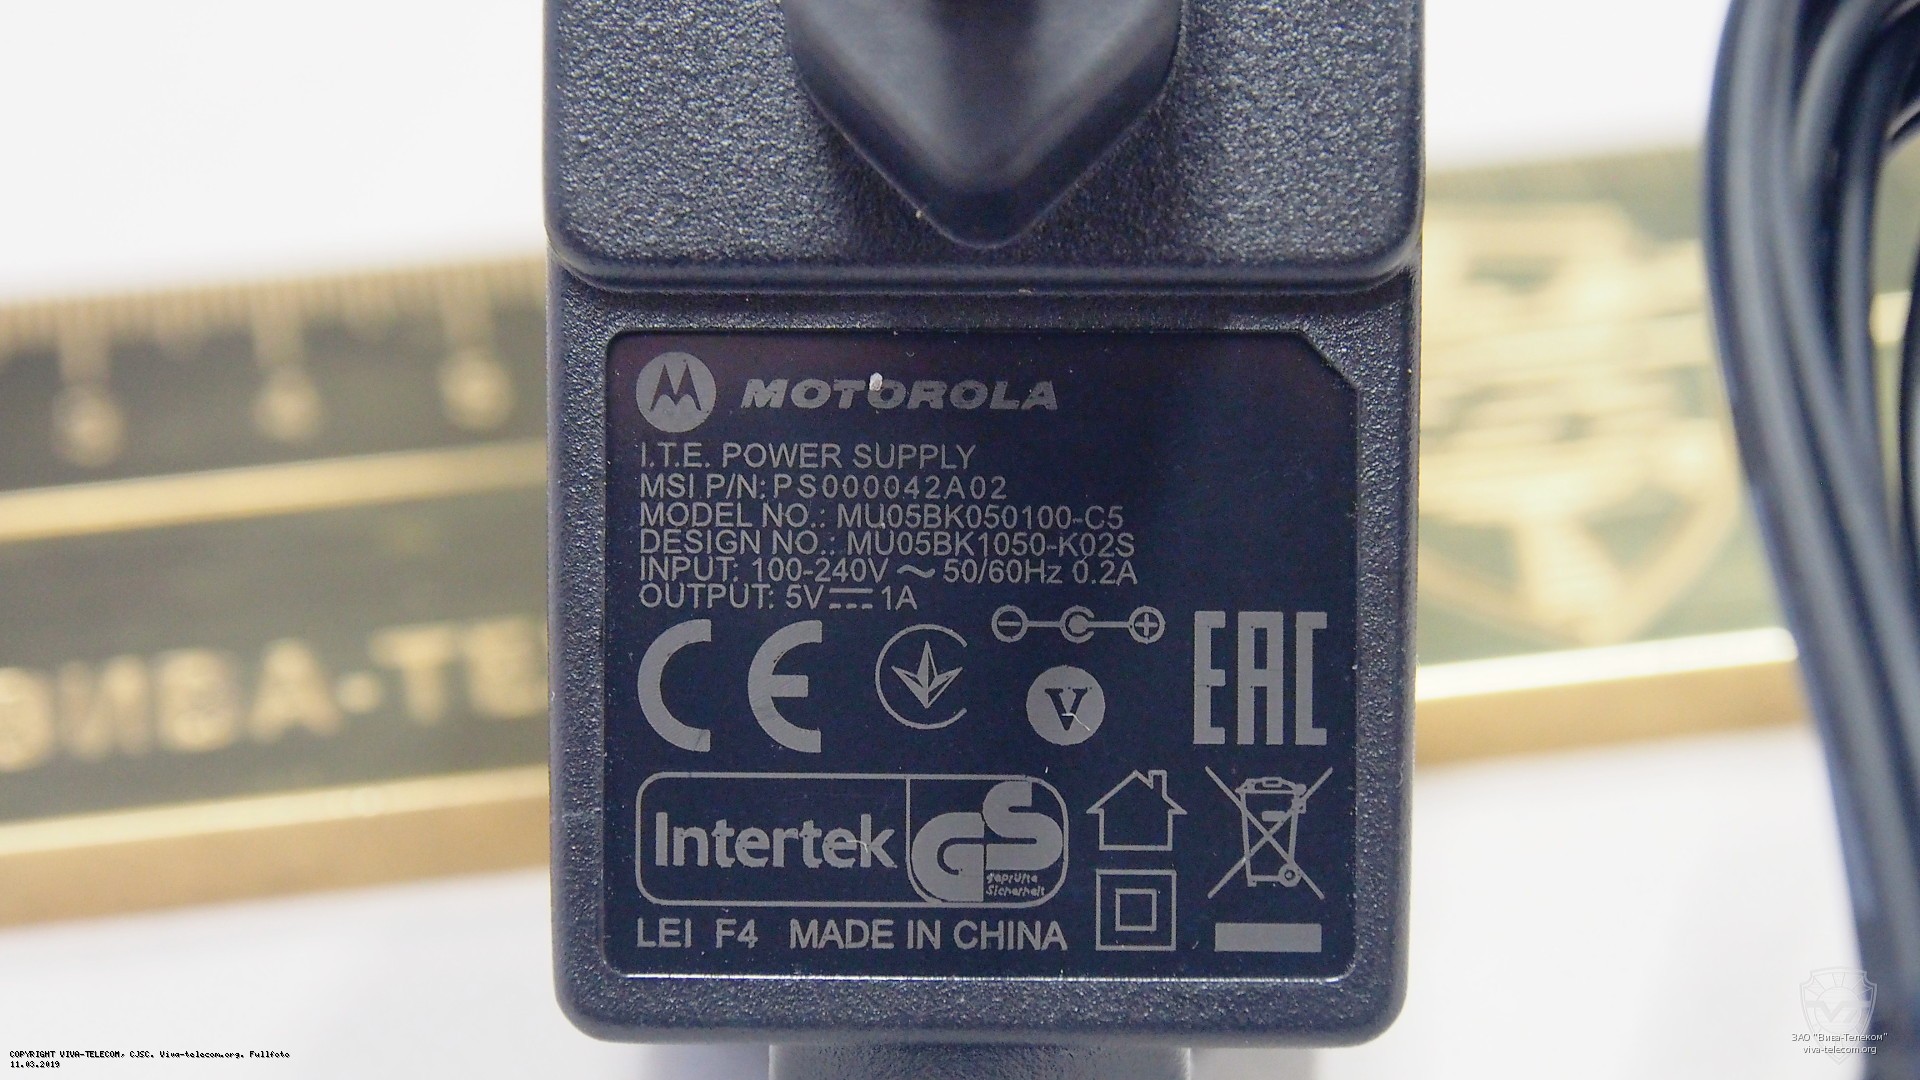    Motorola NNTN8245